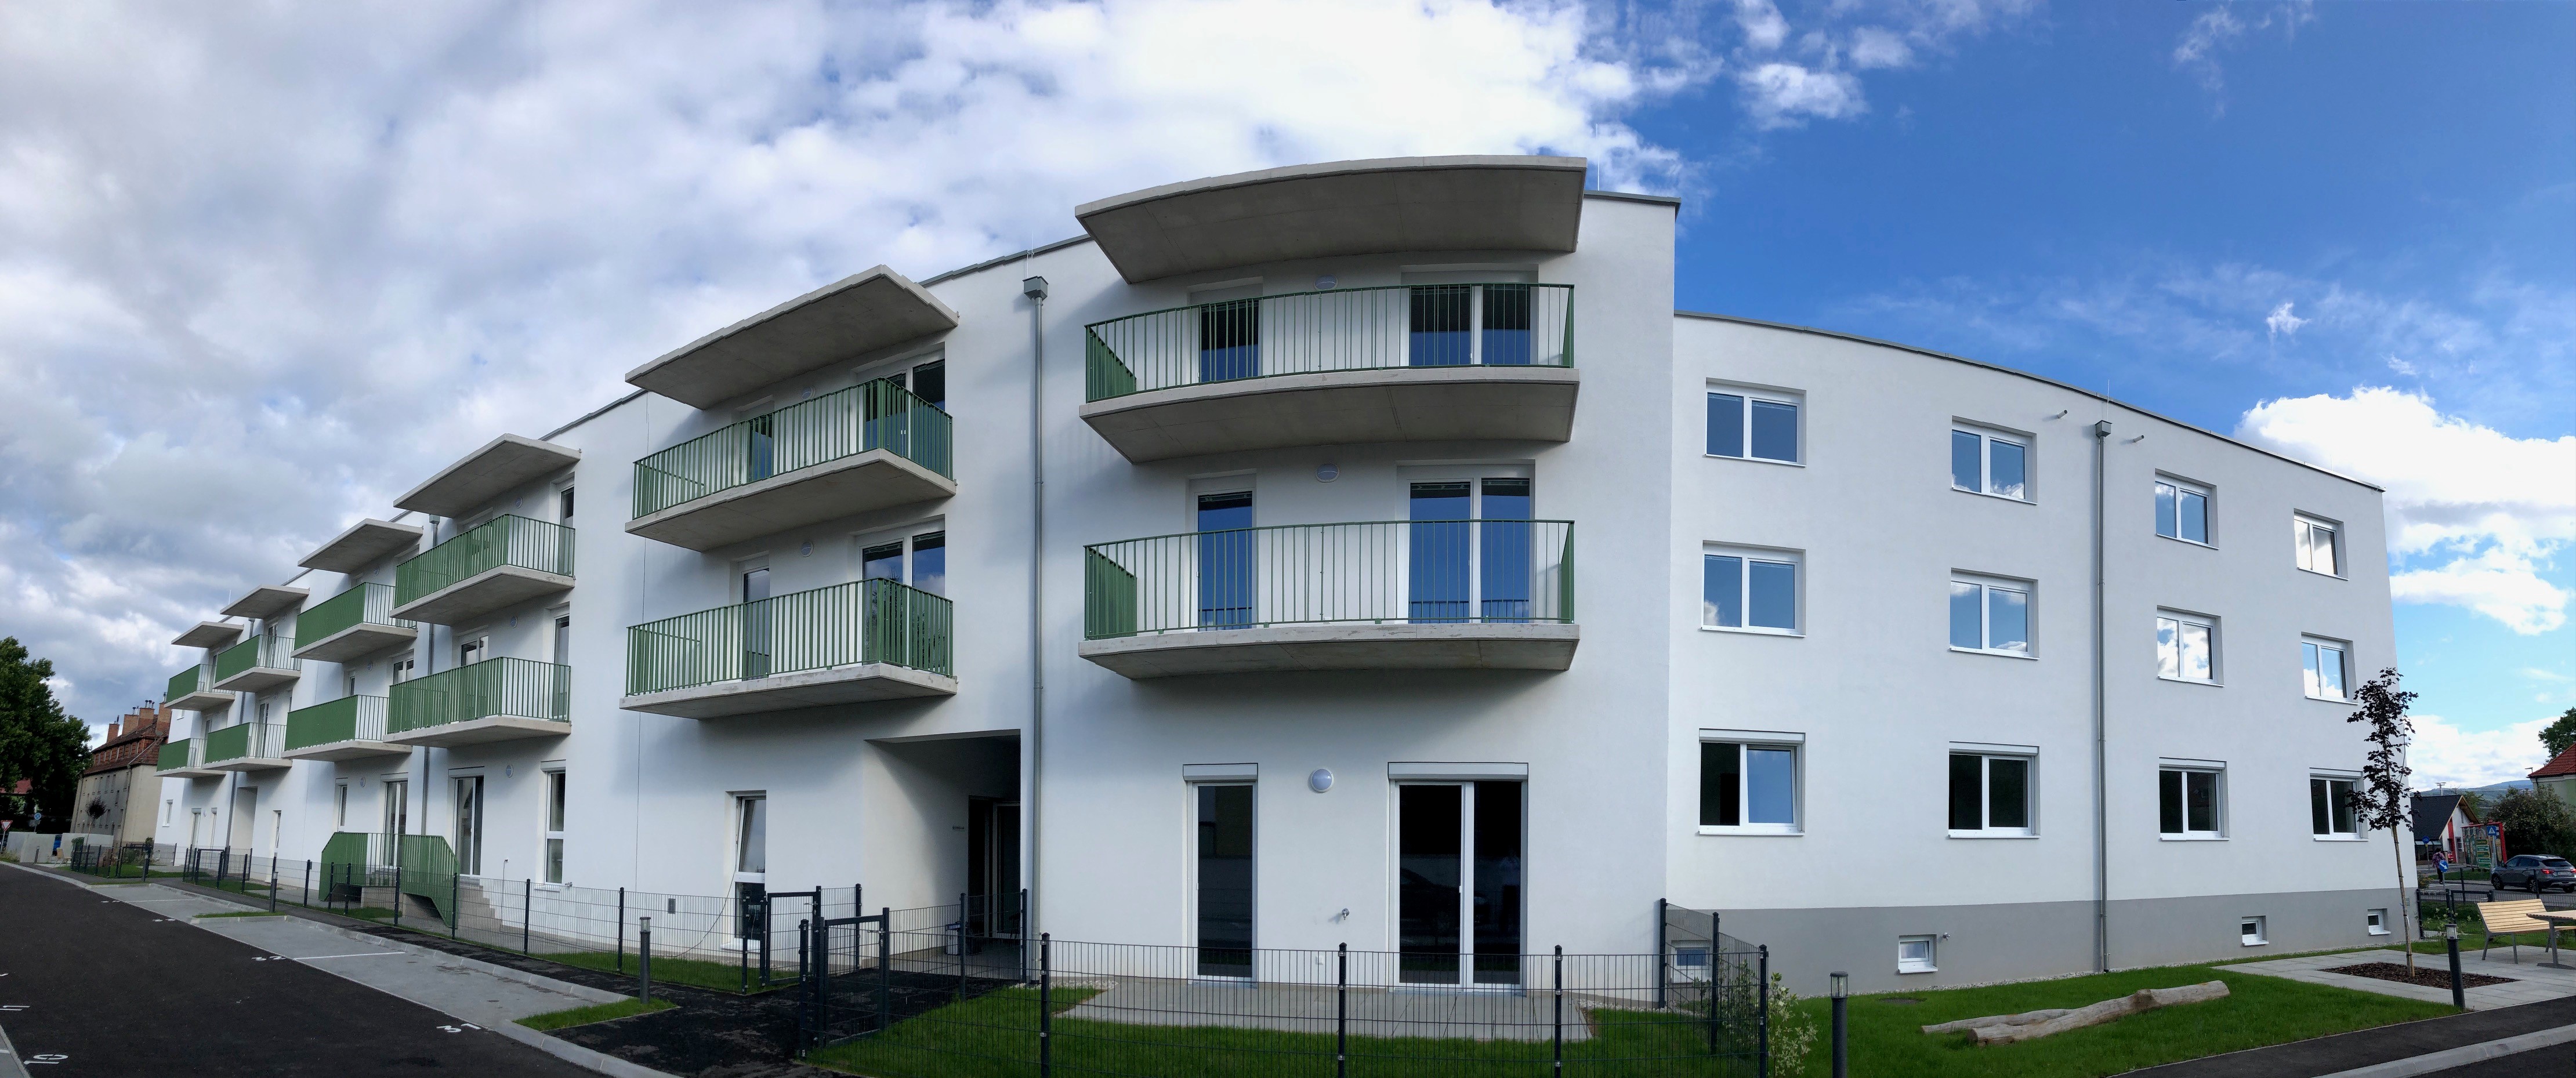 BVH Ternitz Franz-Dinhoblstraße  - Costruzione edilizia